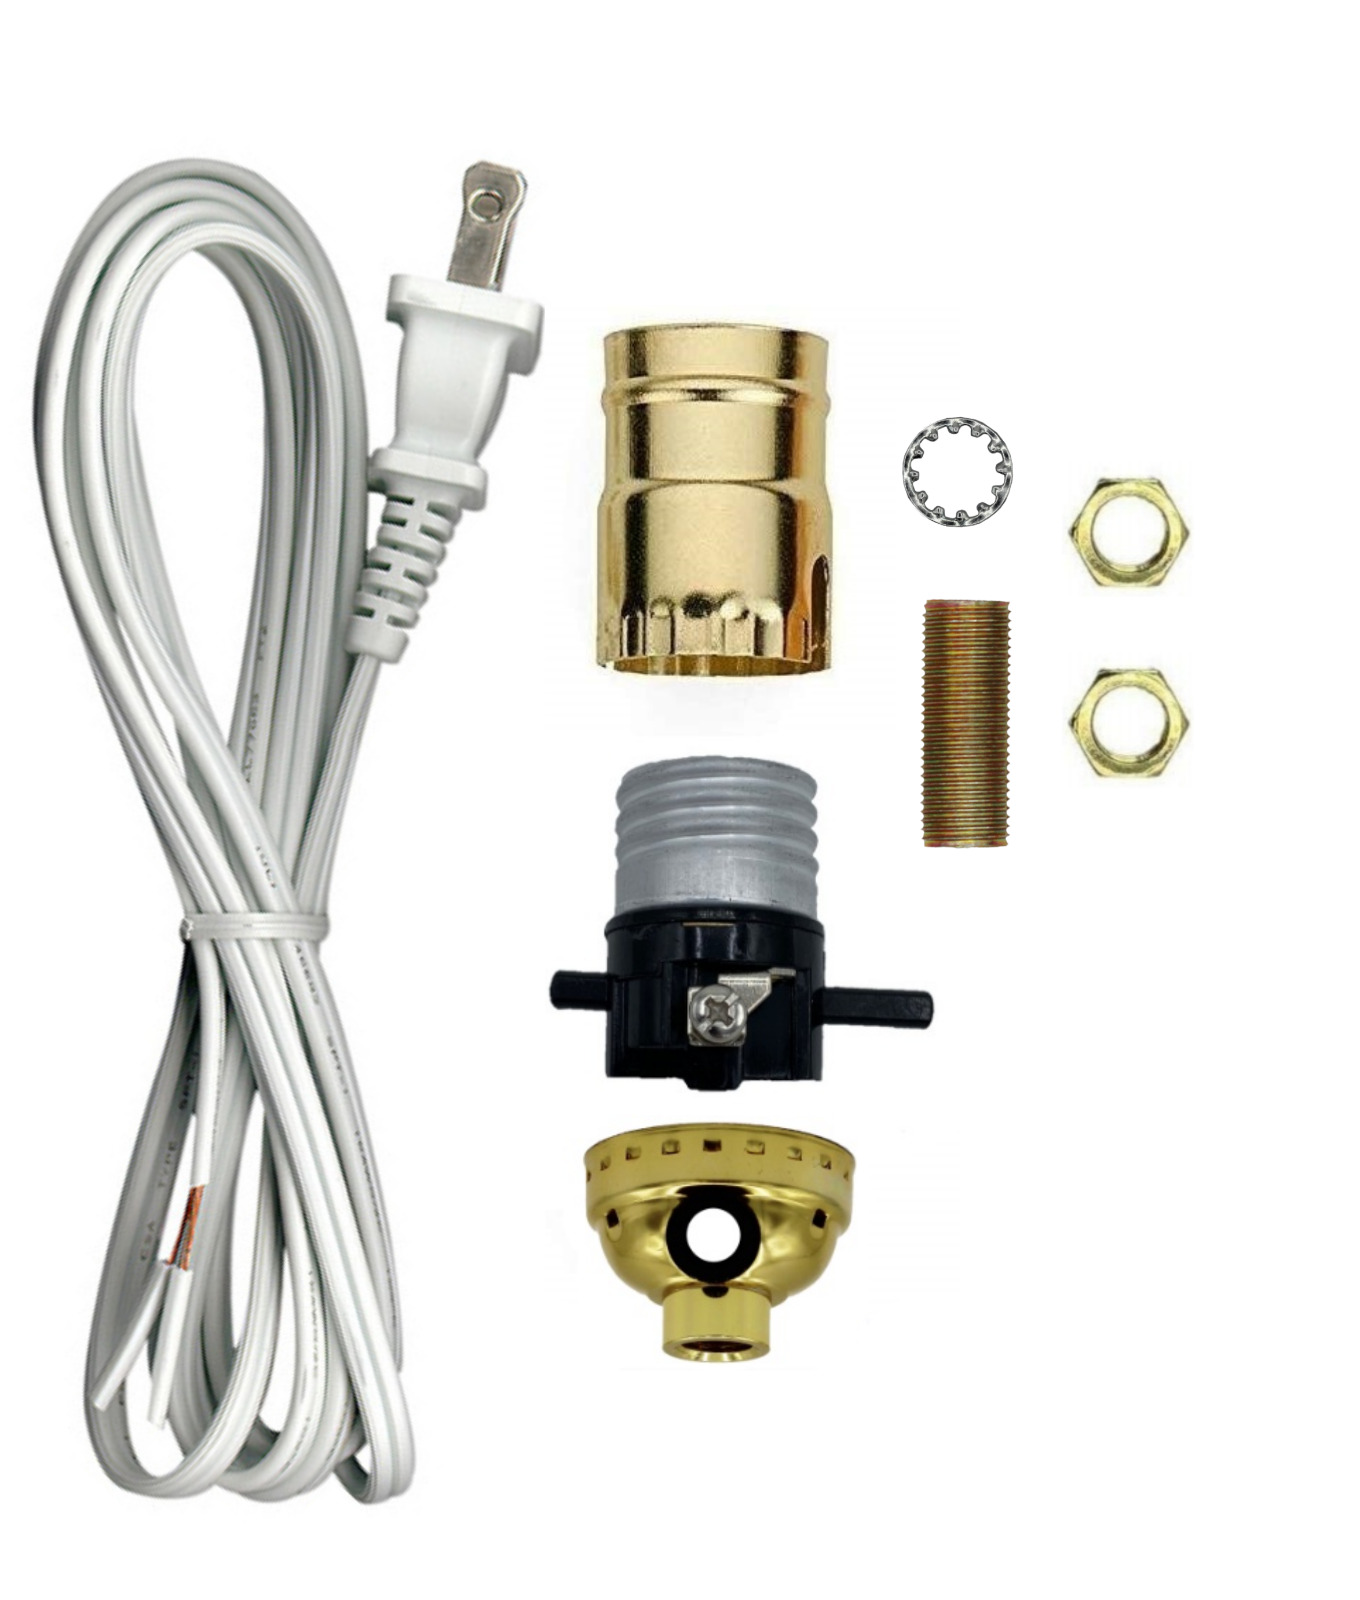 Creative Hobbies Make a Lamp or Repair Kit with Basic Hardware - Gold